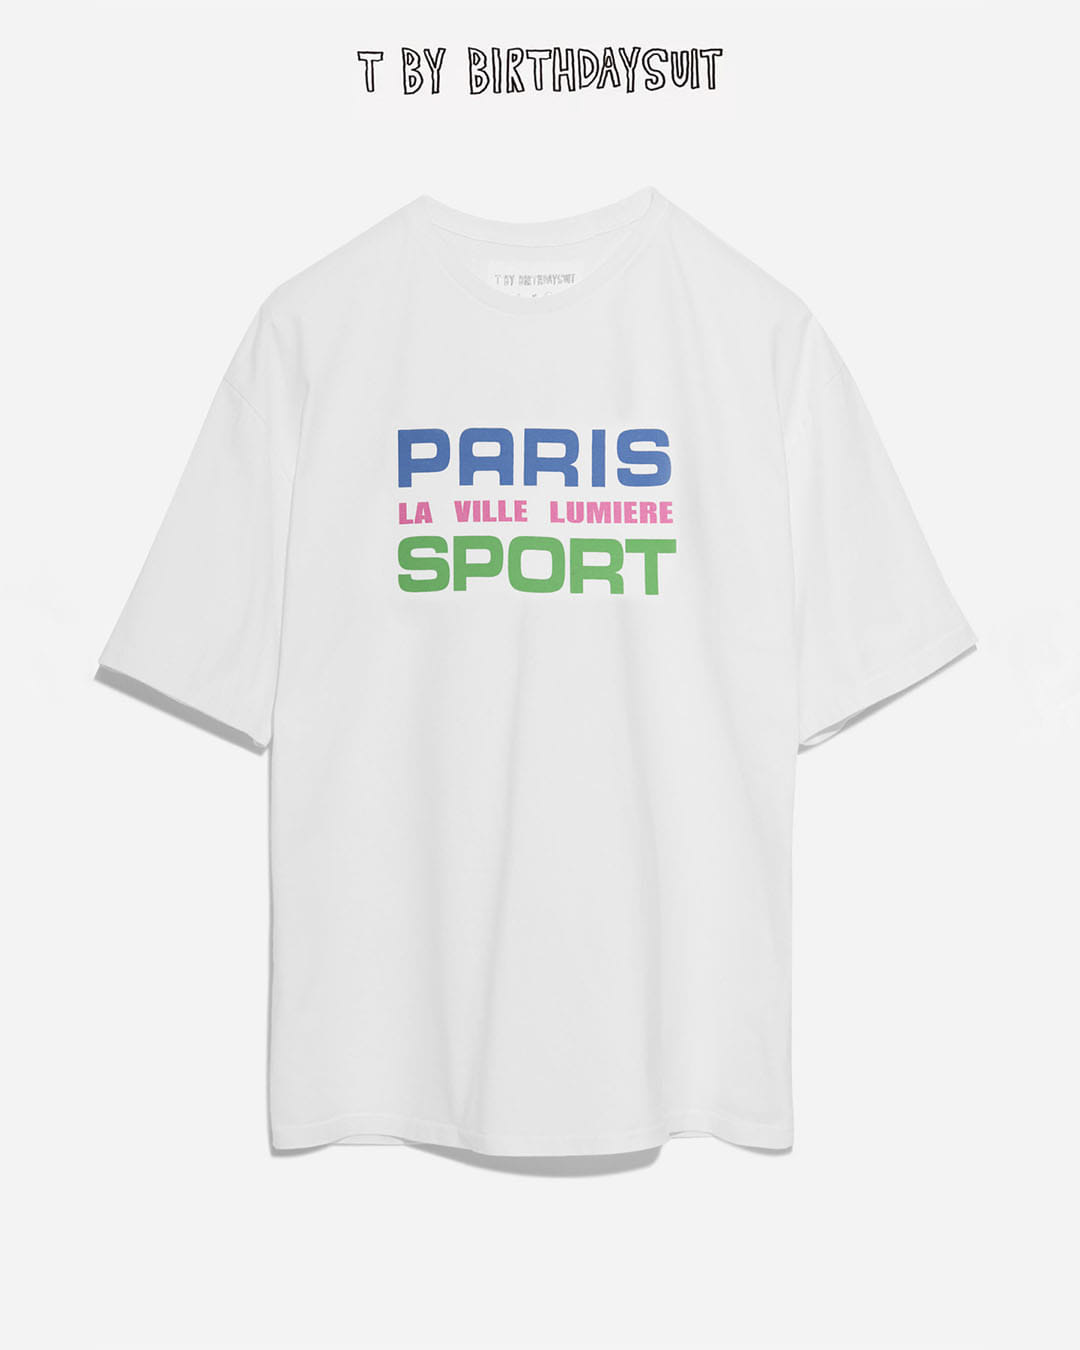 PARIS SPORT T-SHIRT (WHITE - COBALT)